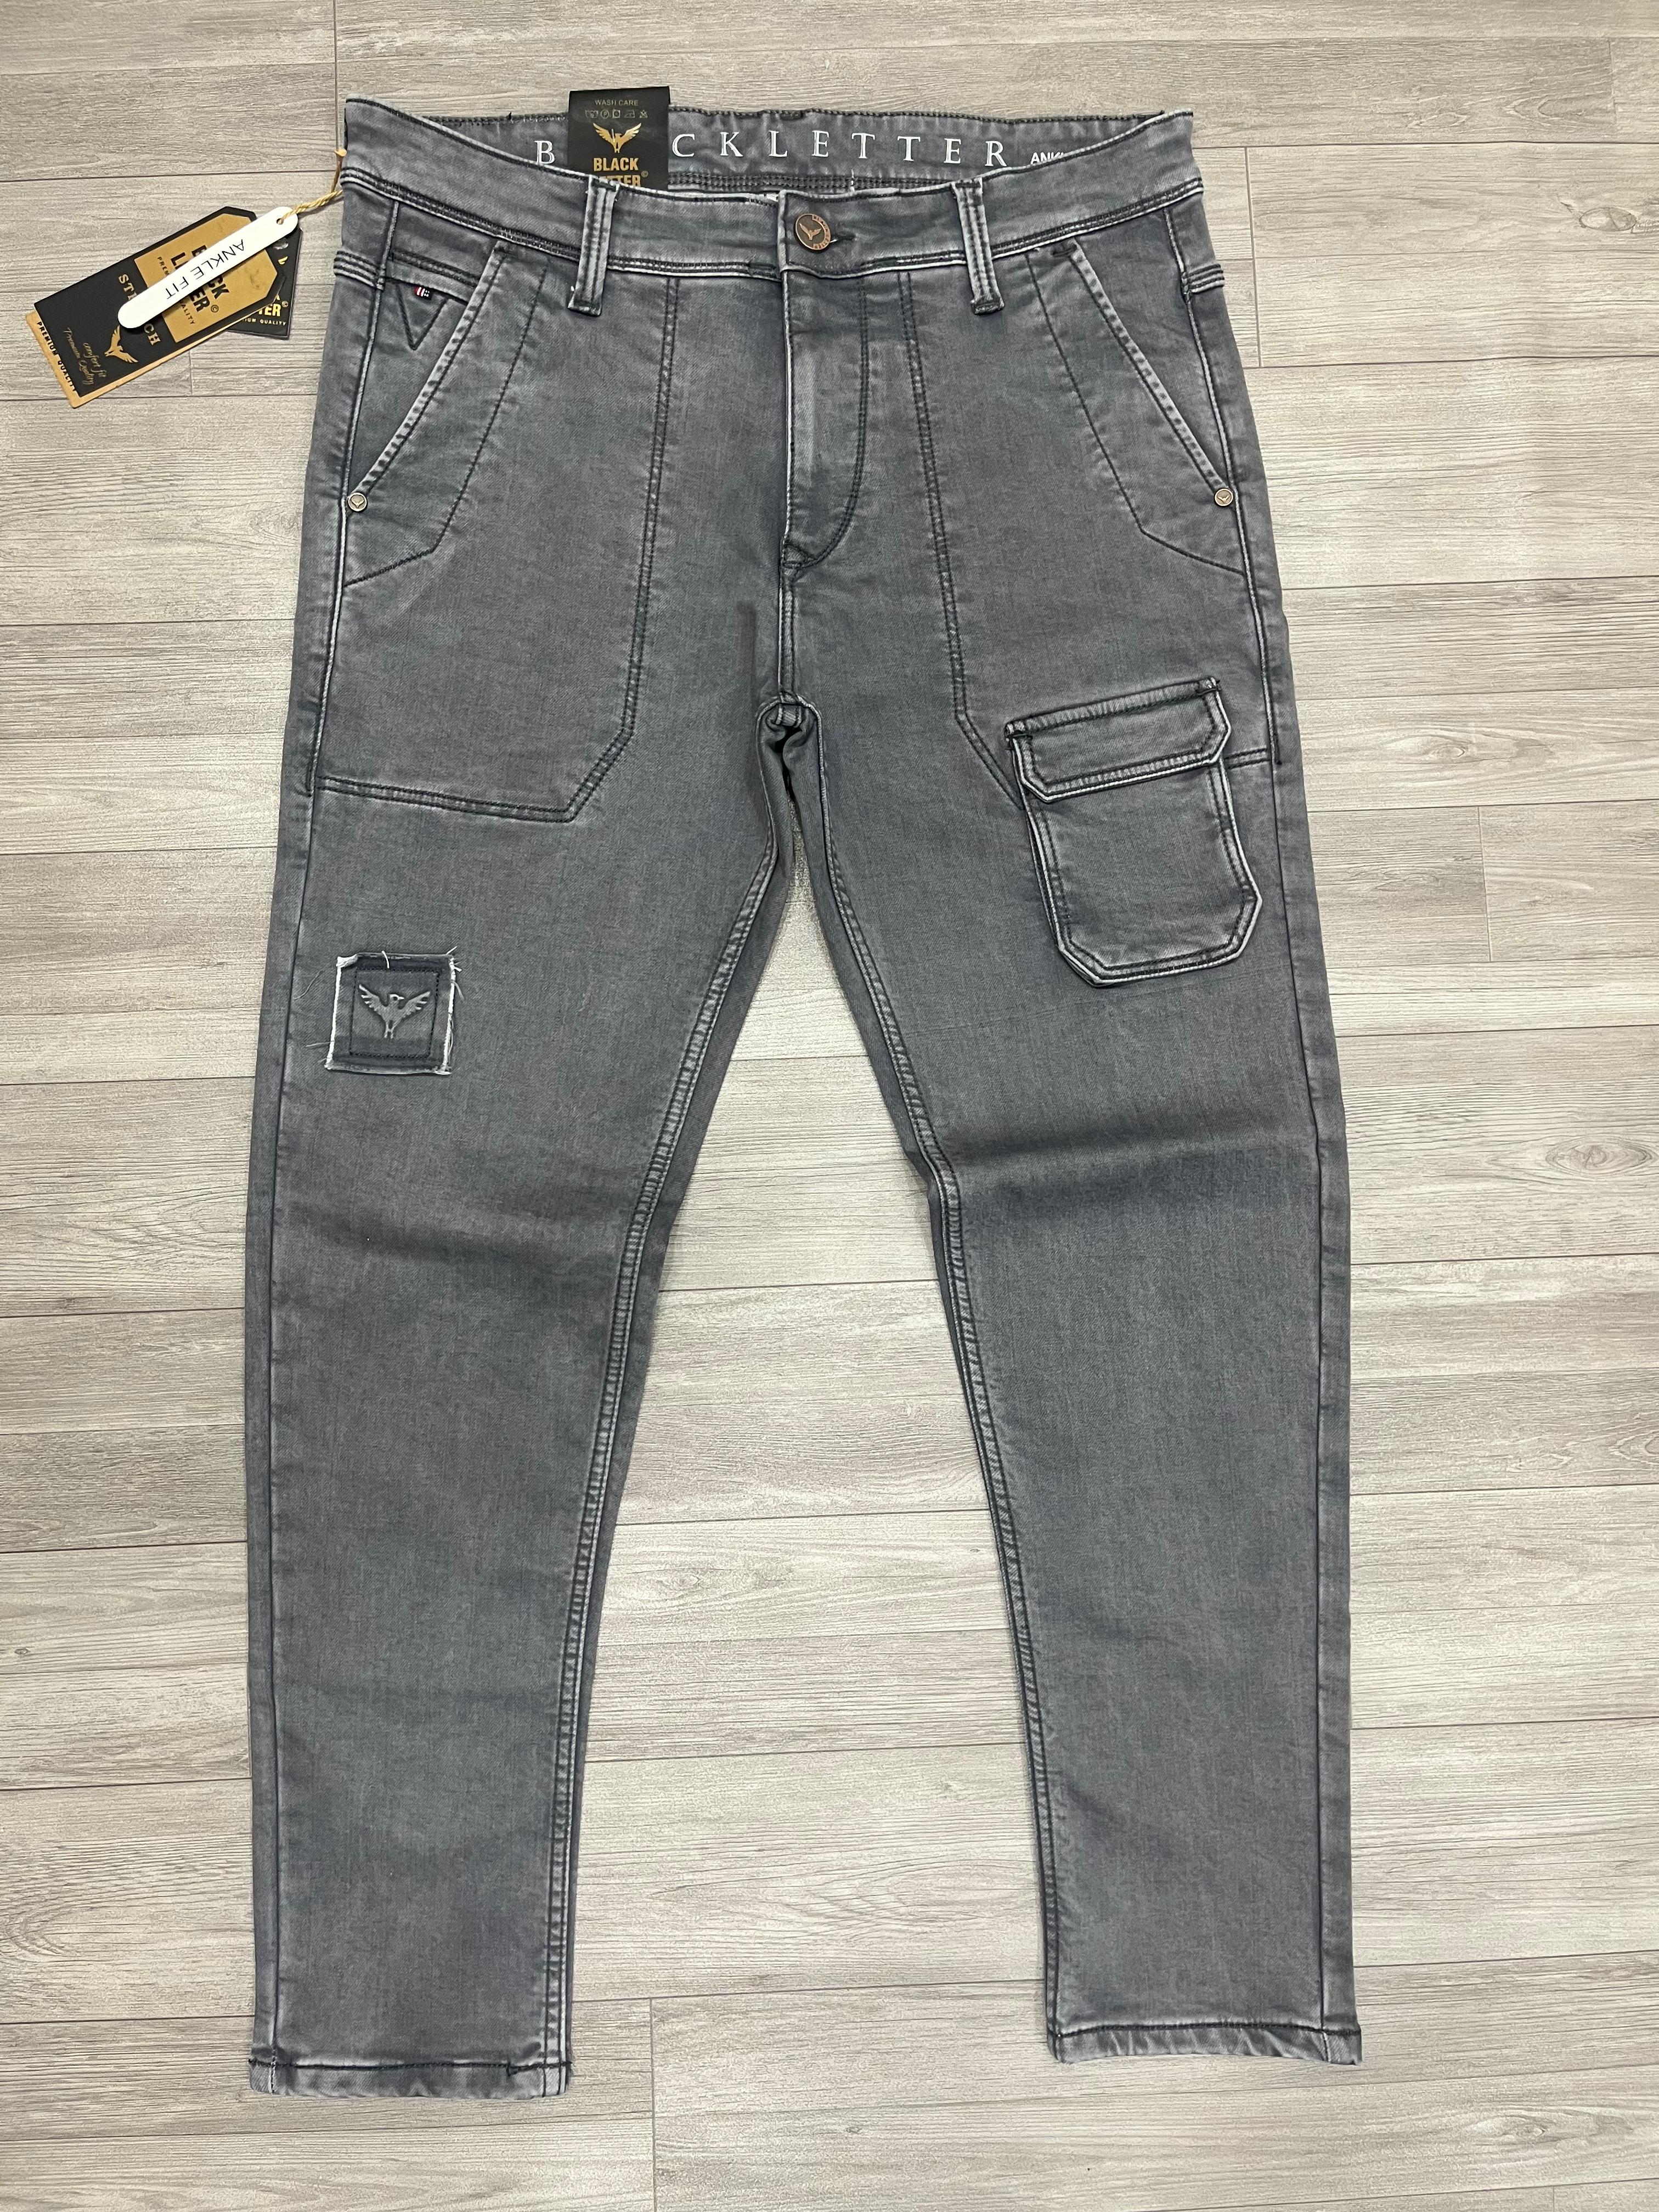 Black Letter Ankle Fit Cross Pocket with Extra front Pocket Jeans